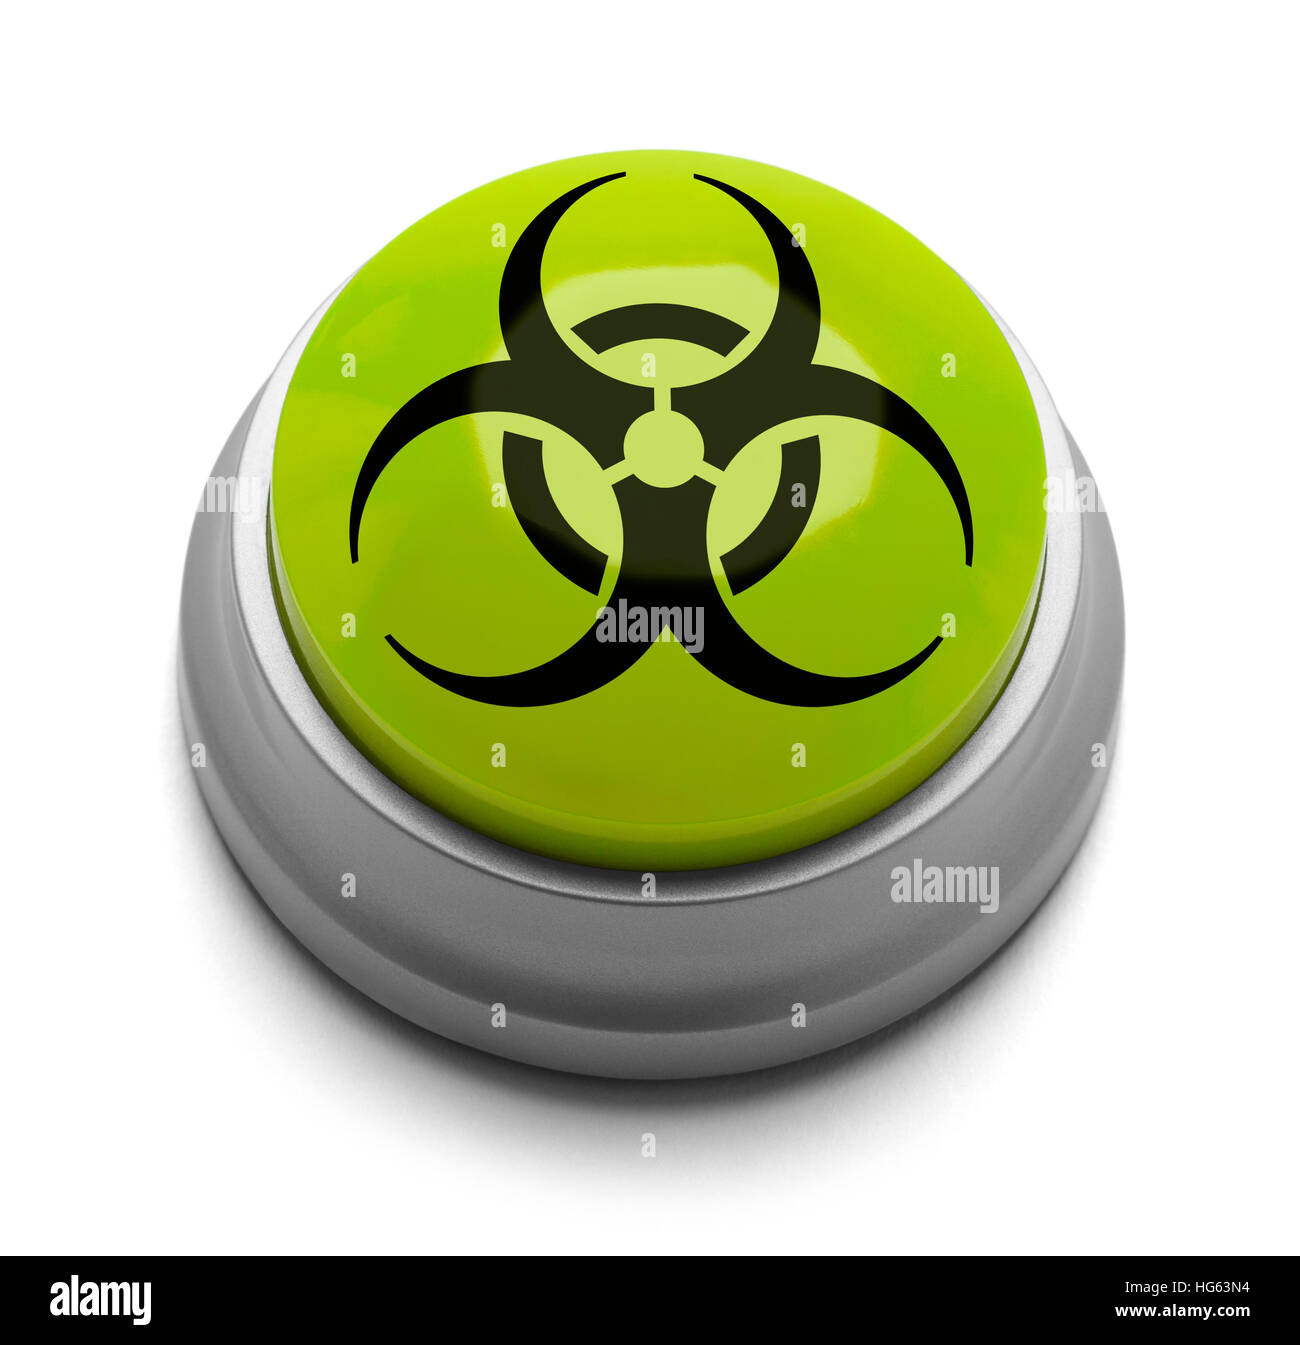 Green and Black Bio Hazard Button Isolated on White Background. Stock Photo